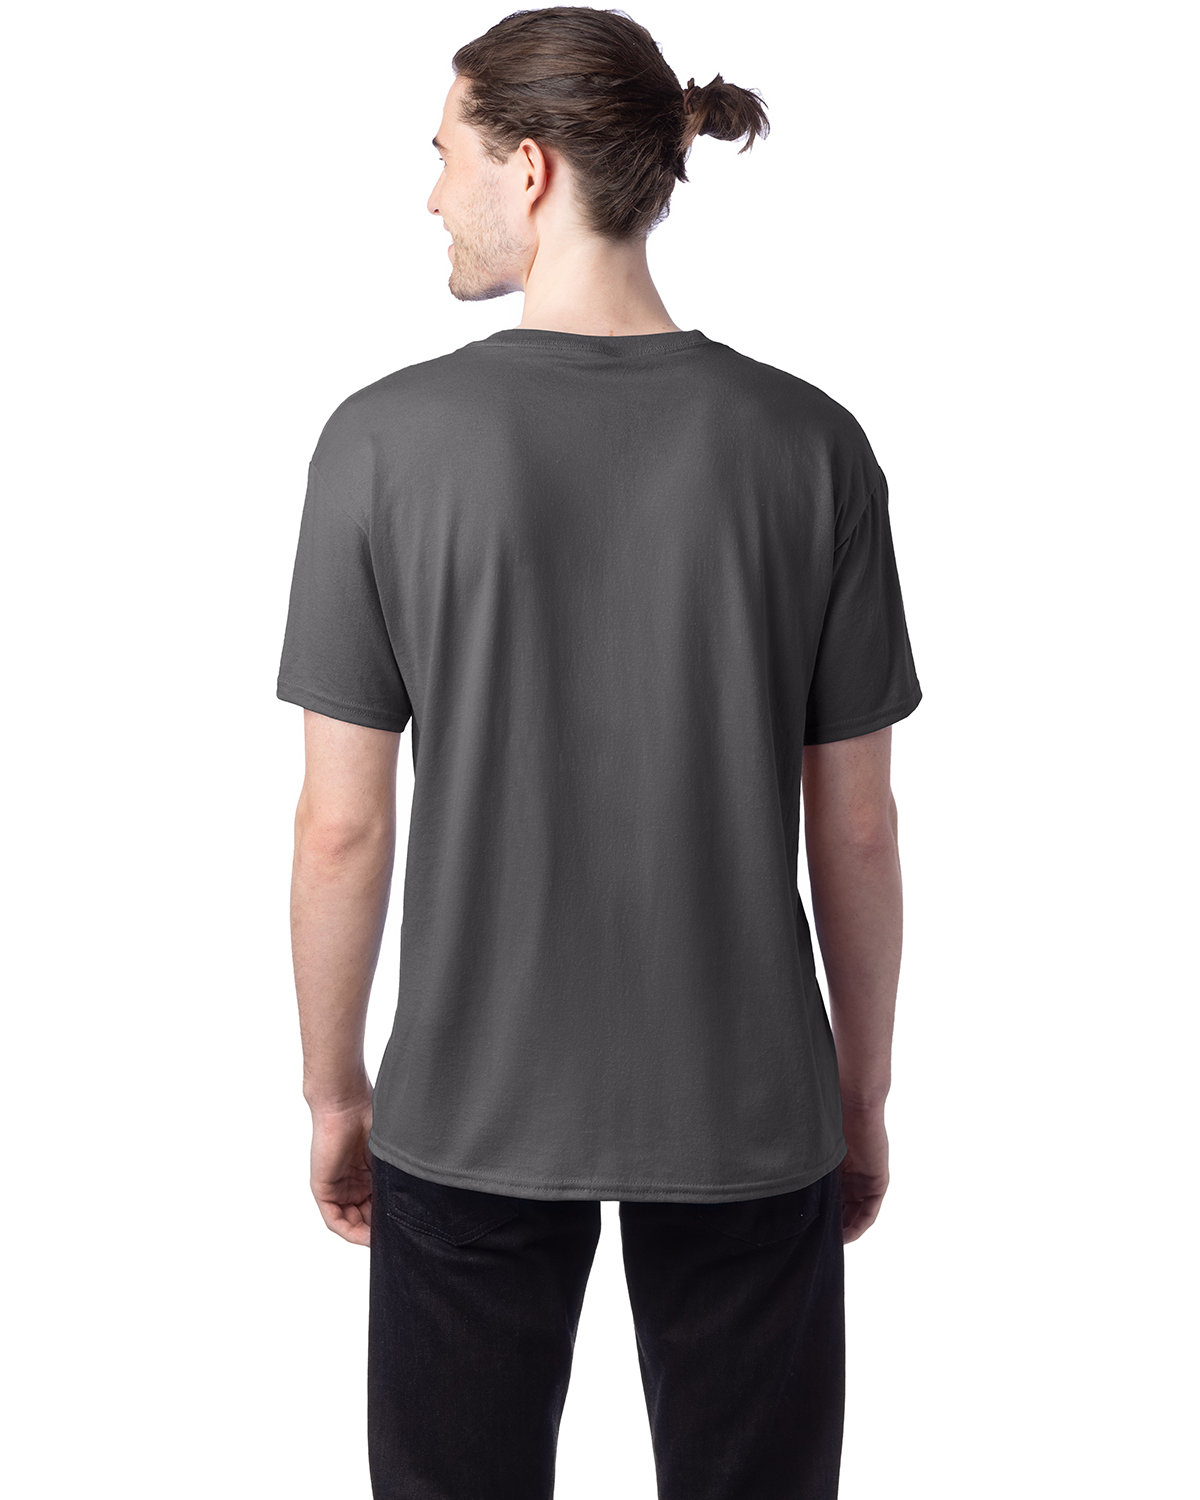 Hanes Men's 50/50 EcoSmart® Crew Neck Tee Shirt S-4XL T-Shirt 5170 | eBay